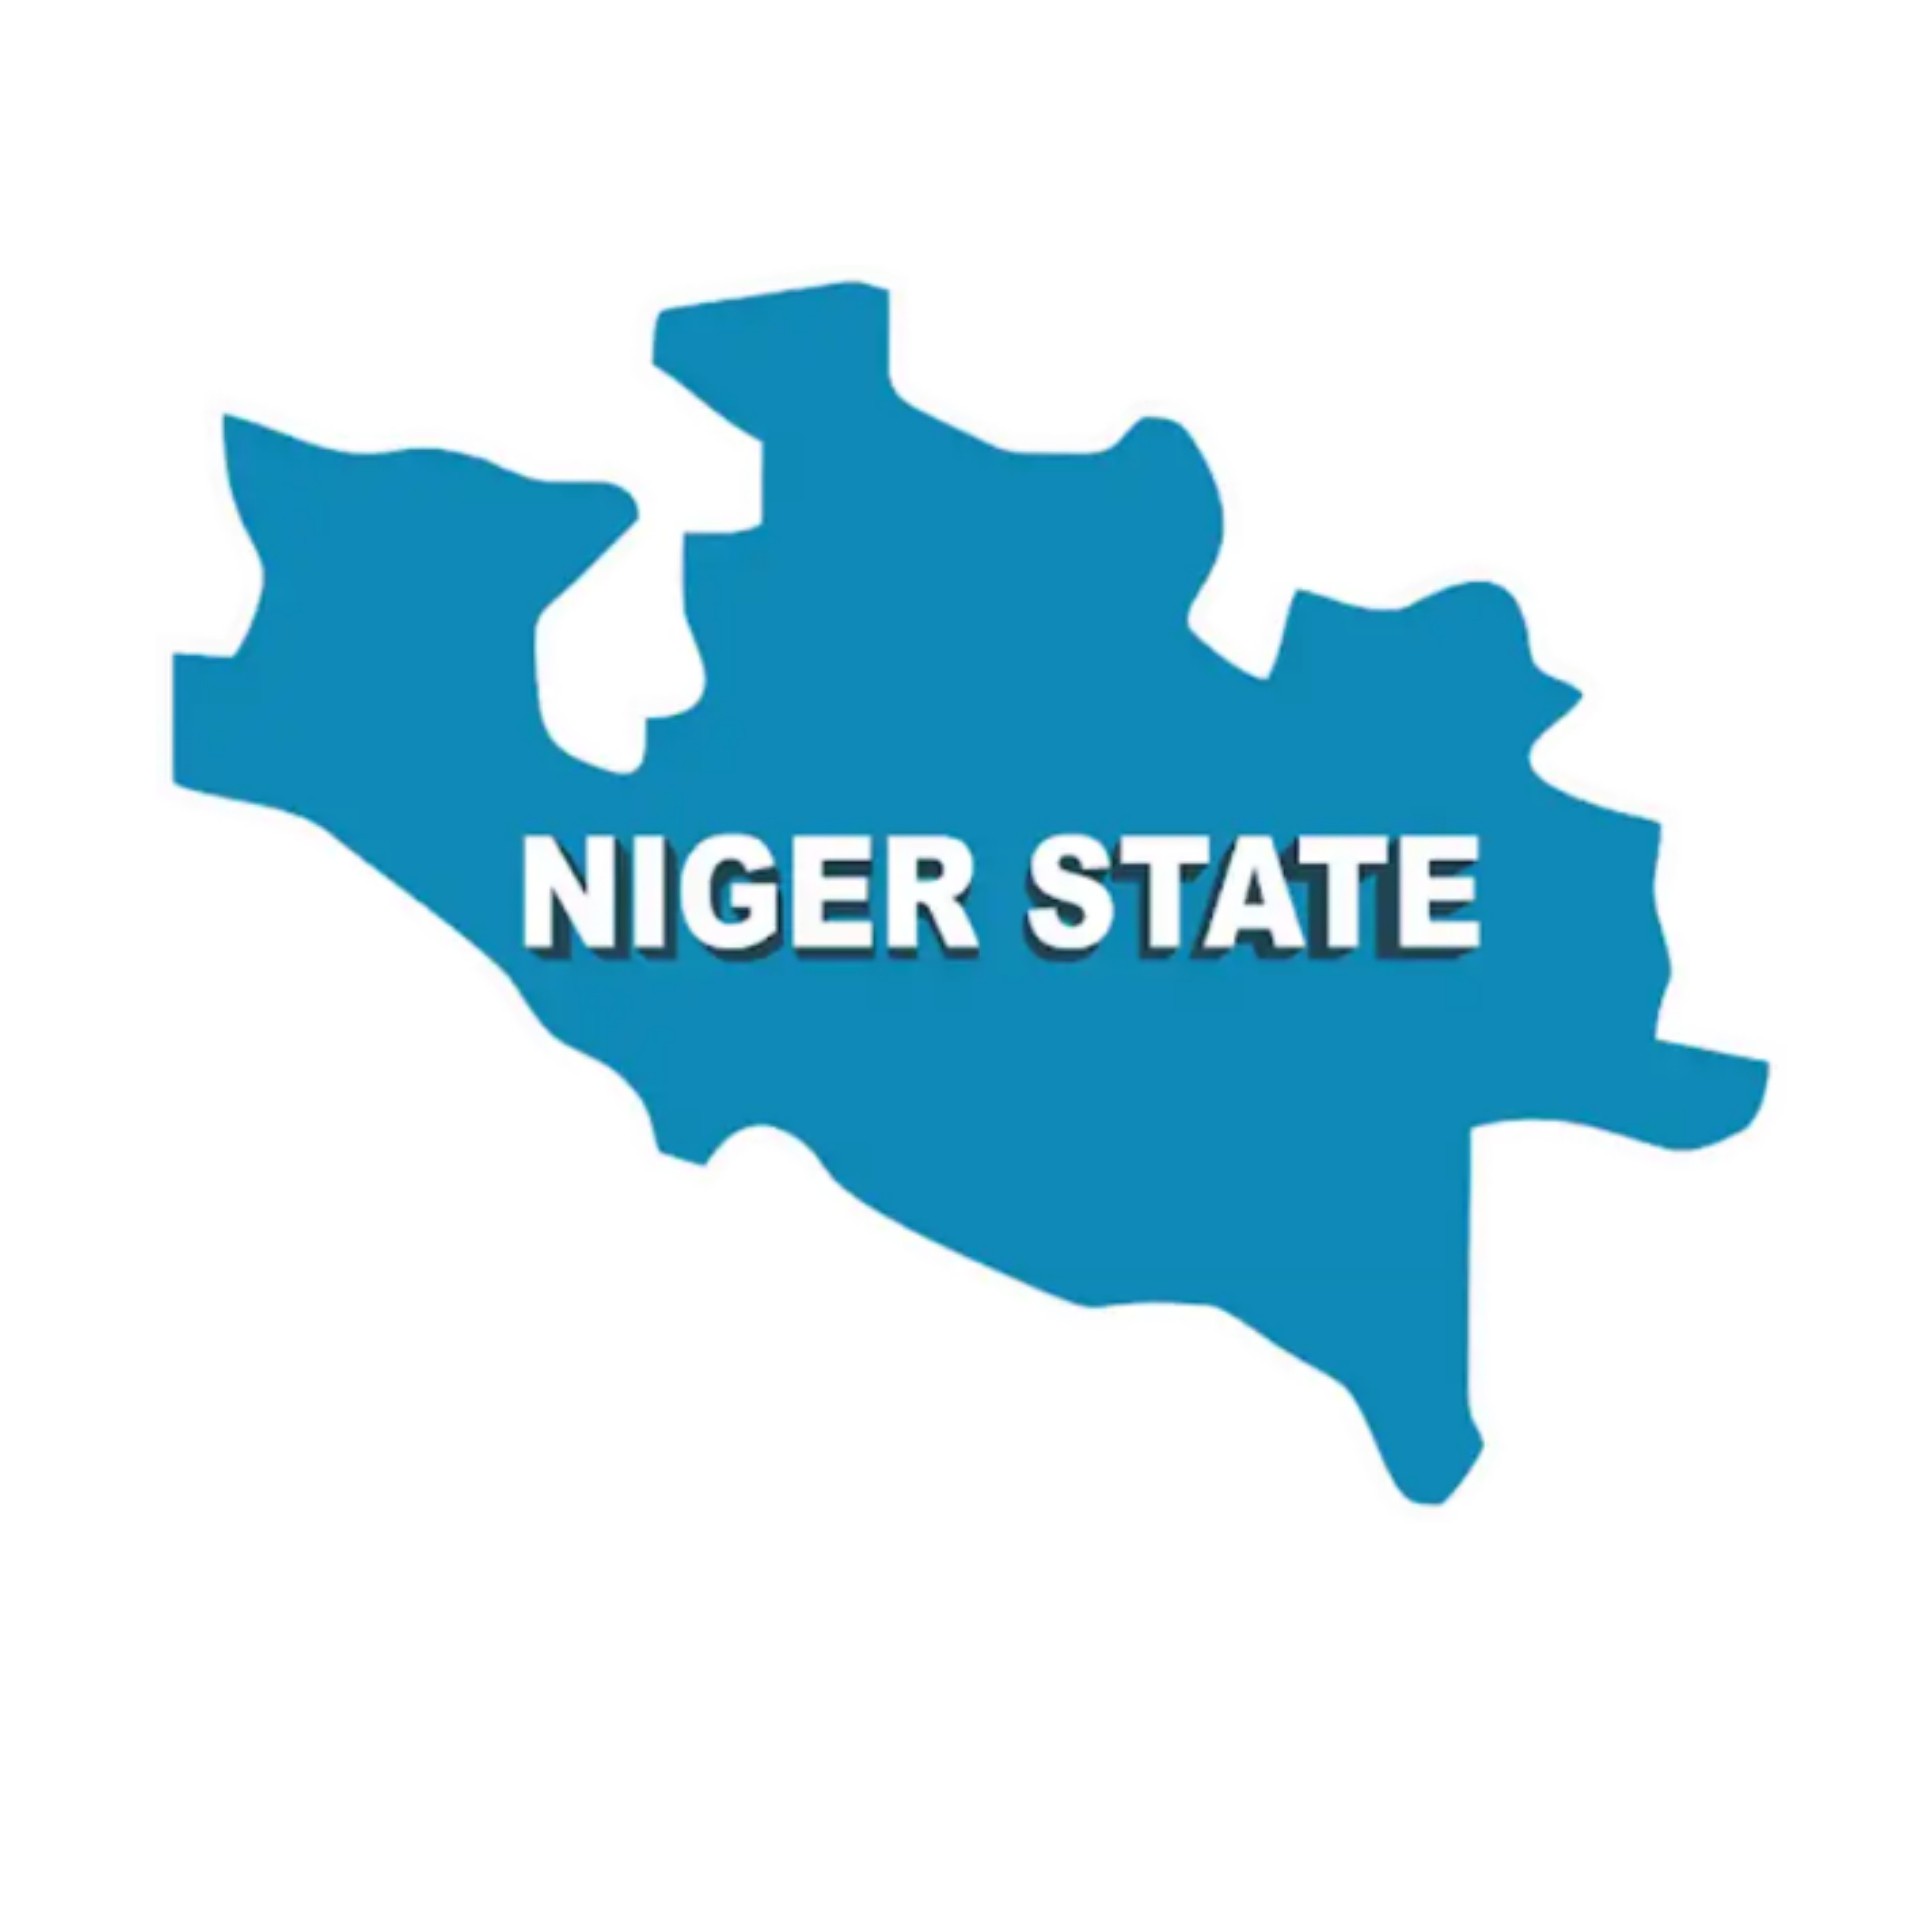 Niger State SUBEB Recruitment